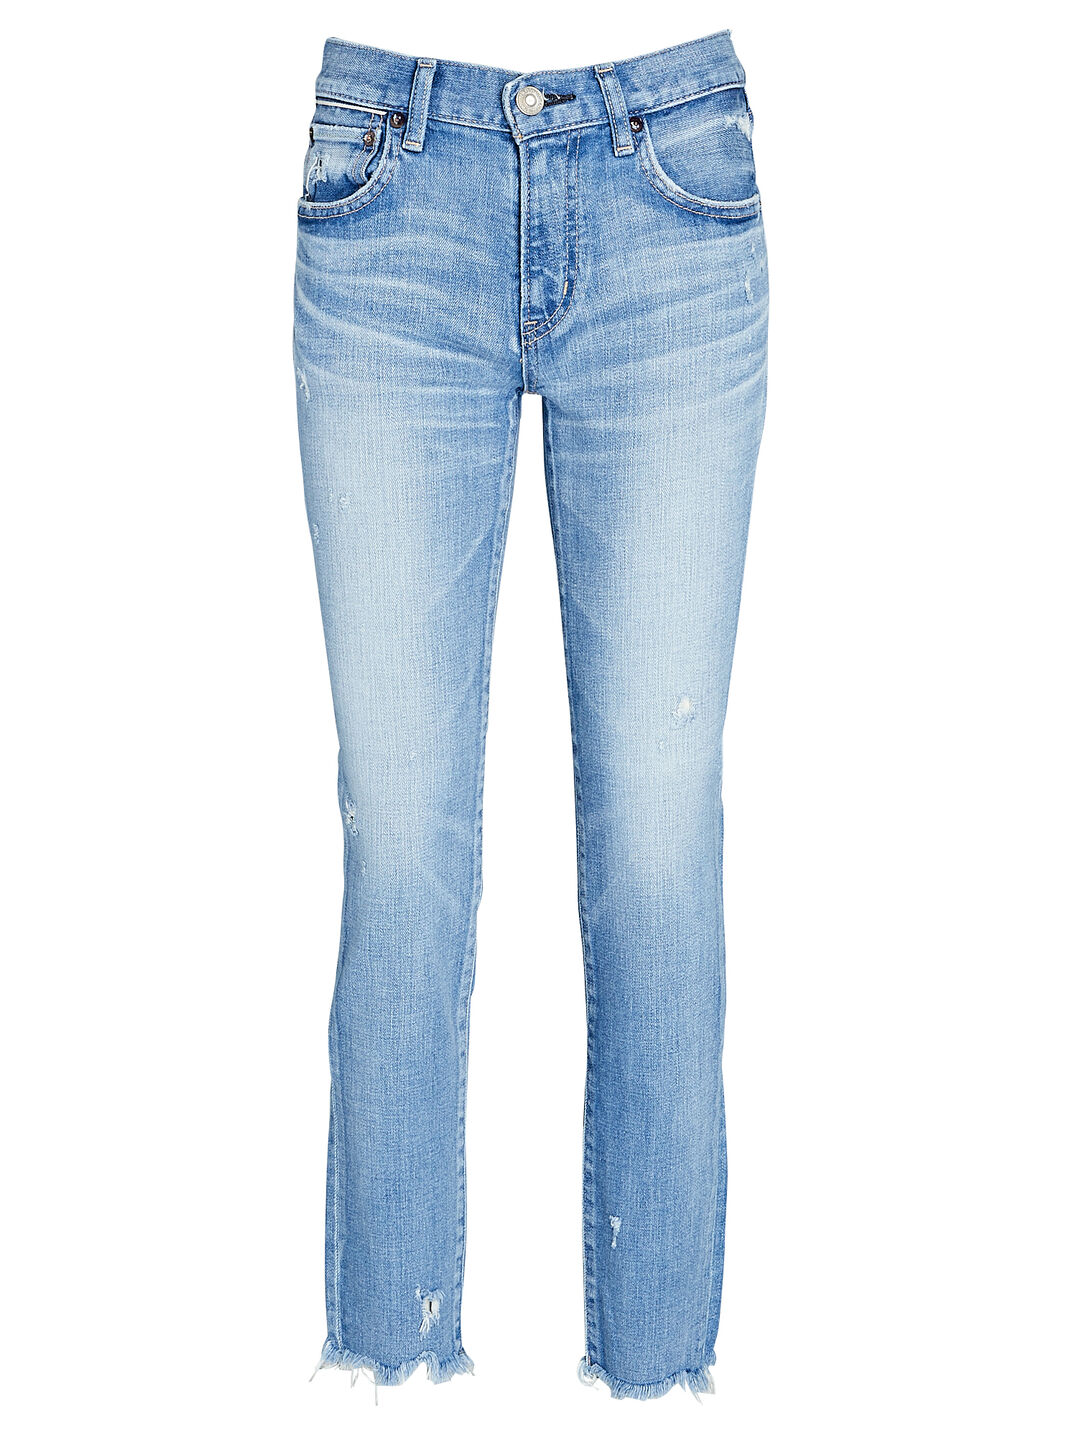 Diana Cropped Skinny Jeans